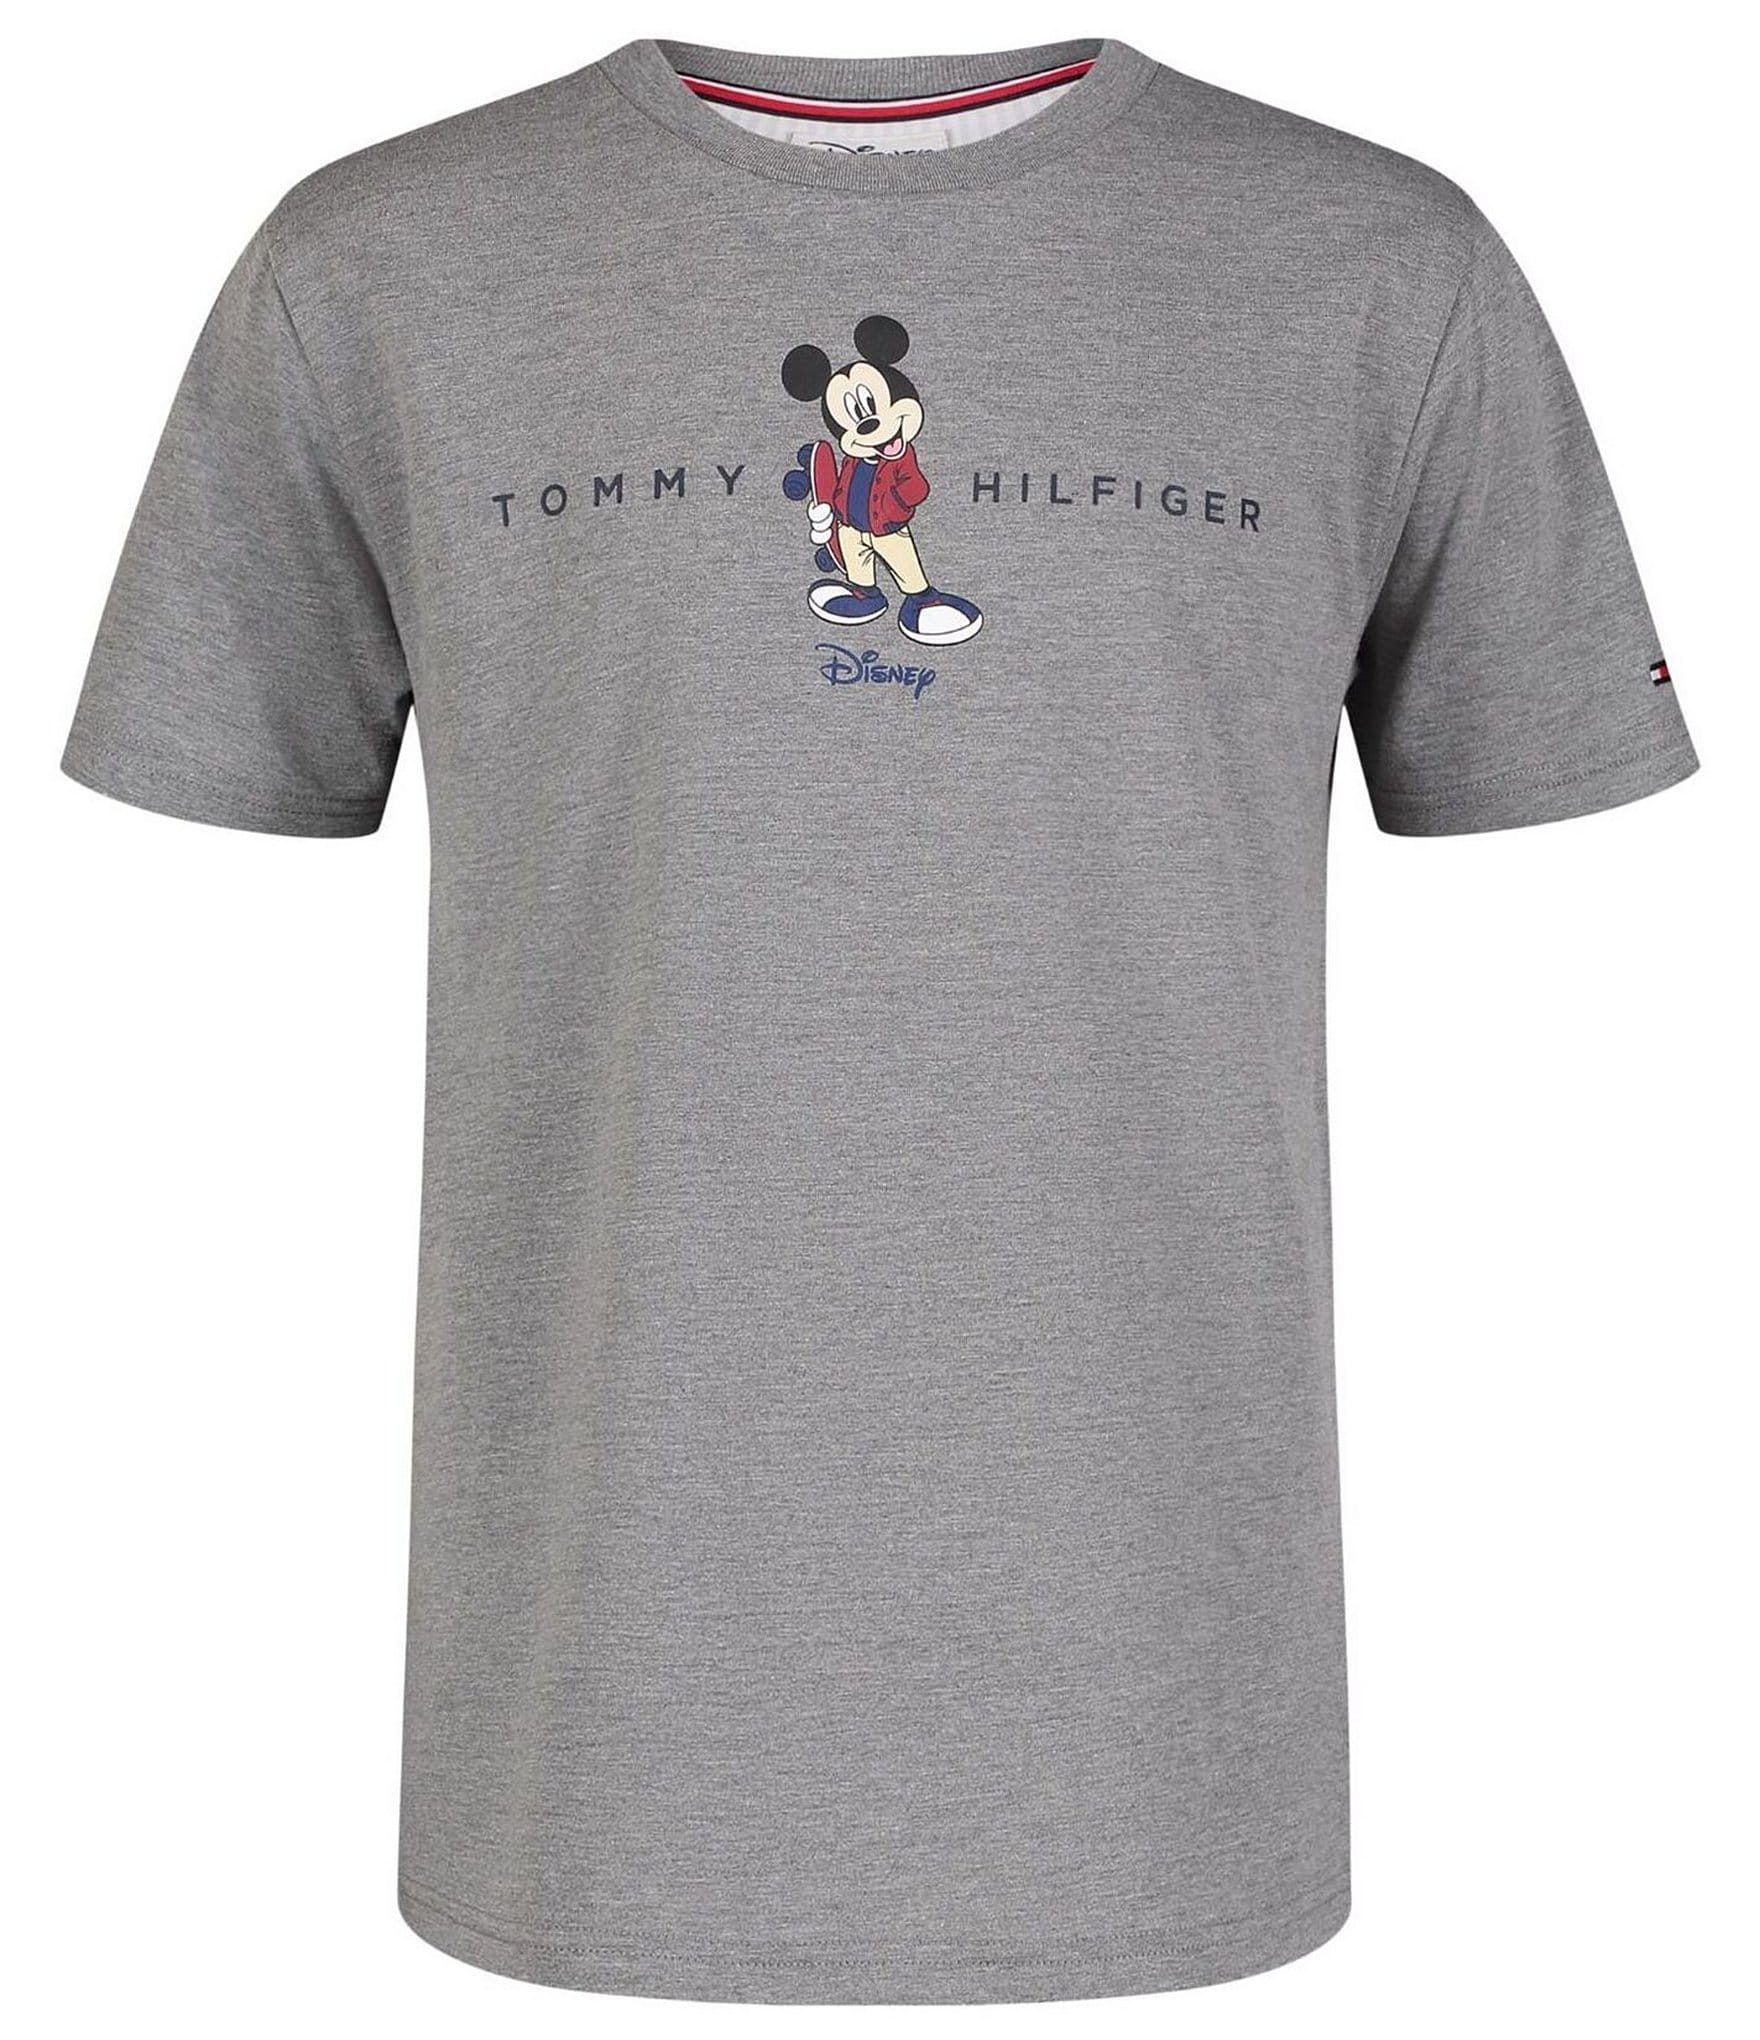 Tommy Hilfiger Mens Cotton T-Shirt Size XL Tall White Short Sleeve